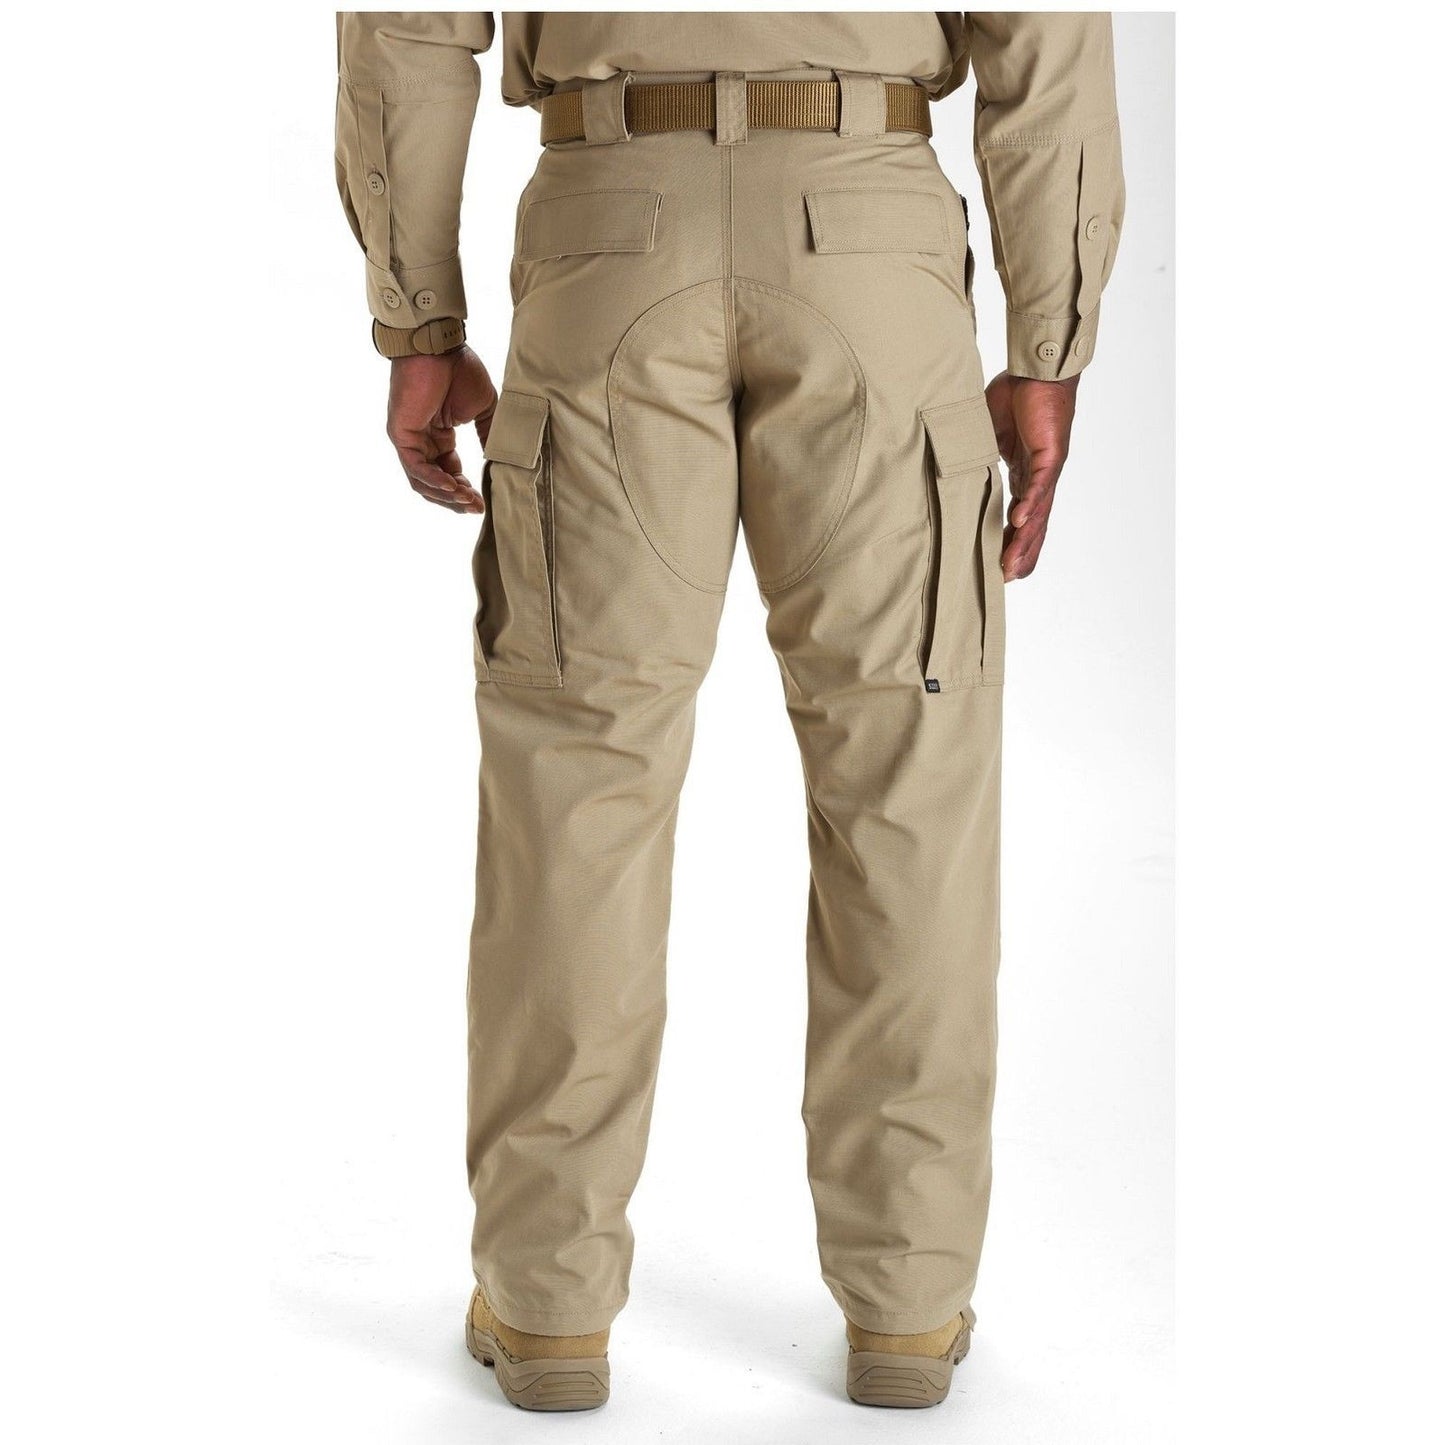 5.11 Tactical Mens Ripstop TDU Cargo Pants - Lightweight Field Duty Uniform Pant